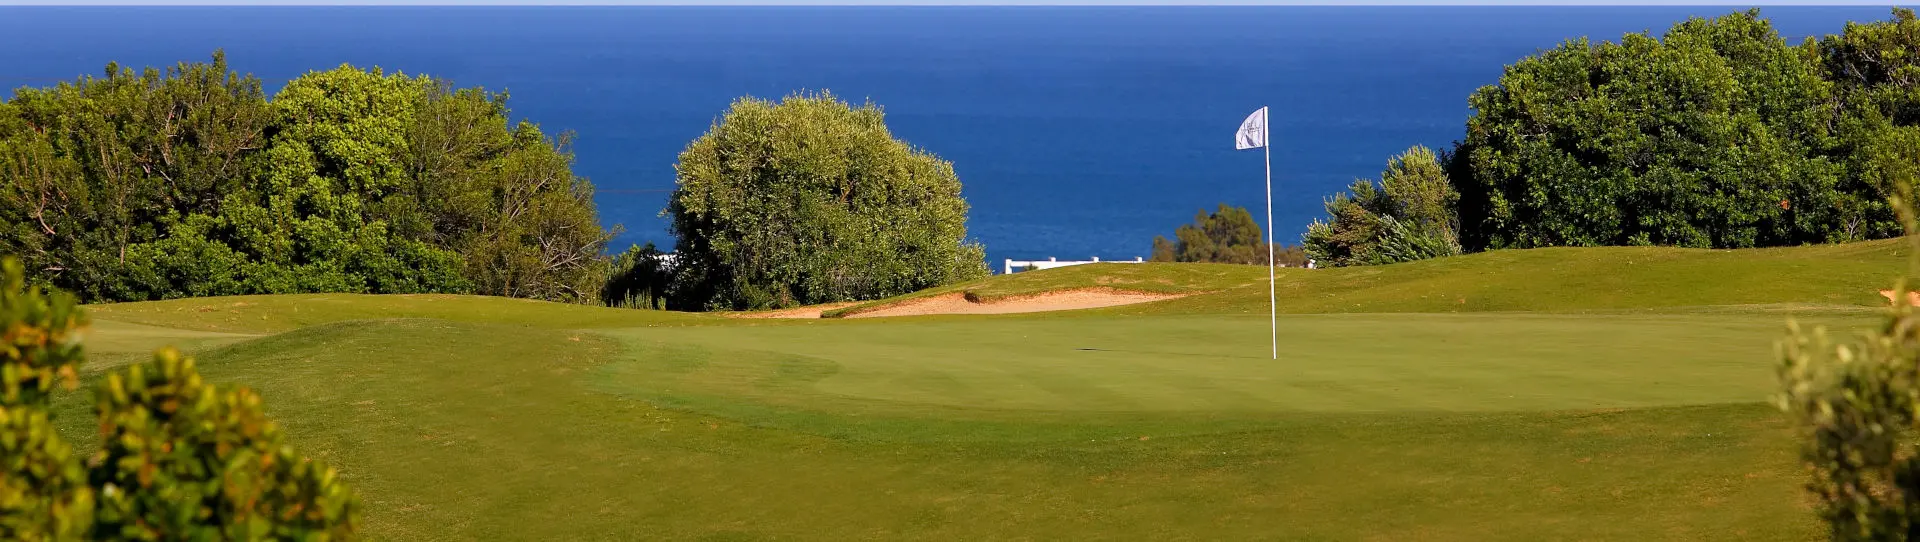 Spain Golf Driving Range - Valle Romano practice area facilities - Photo 1